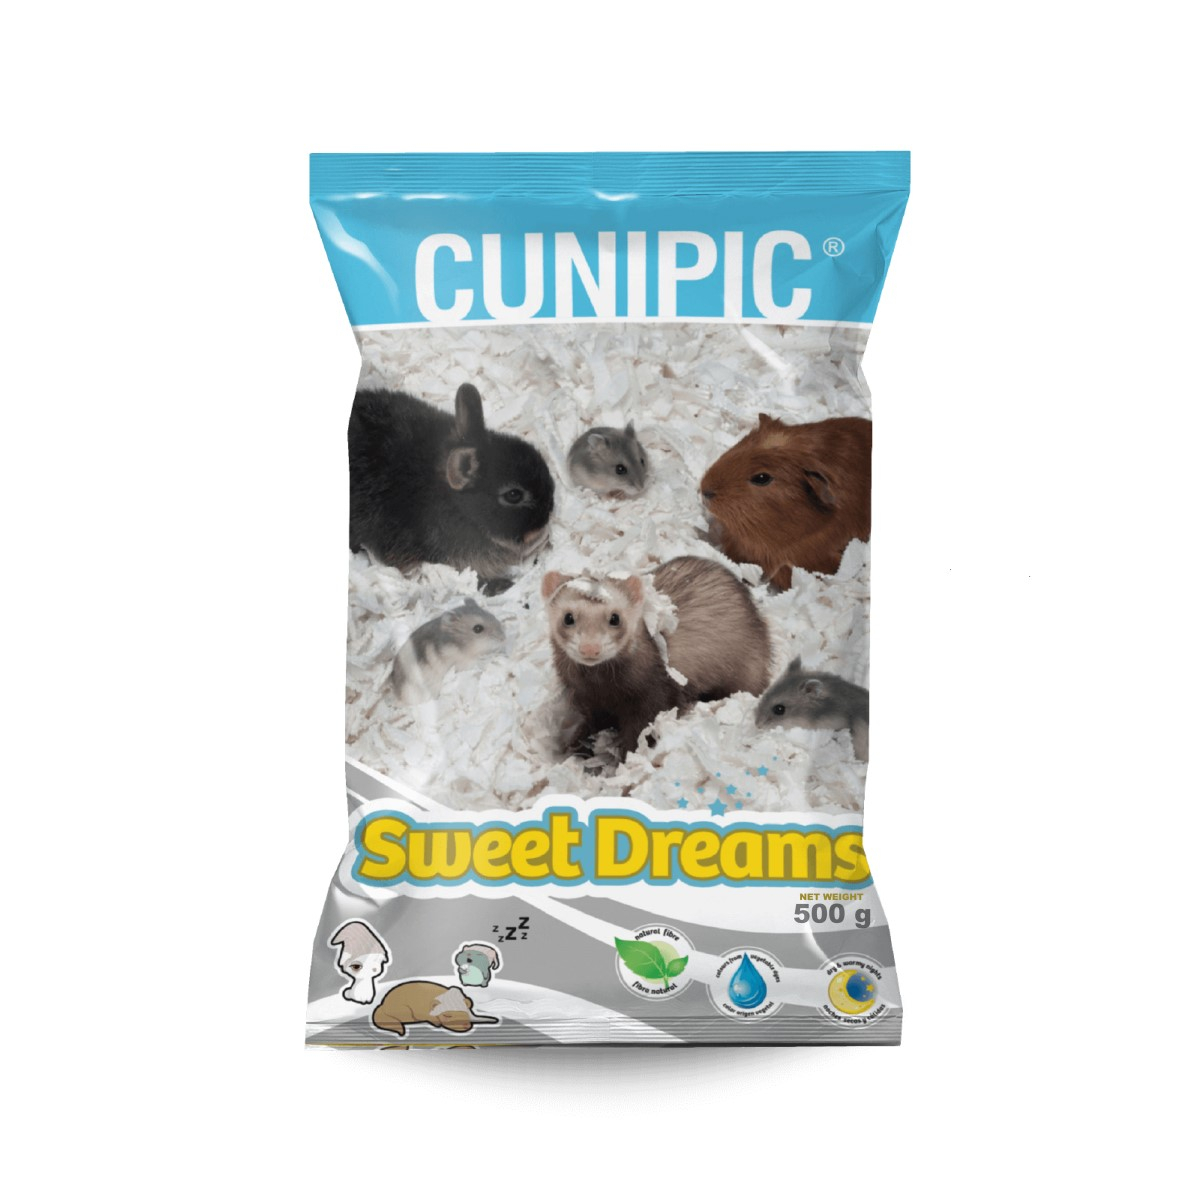 Cunipic Sweet Dreams Cama de papel para pequenos animais feita de papel prensado